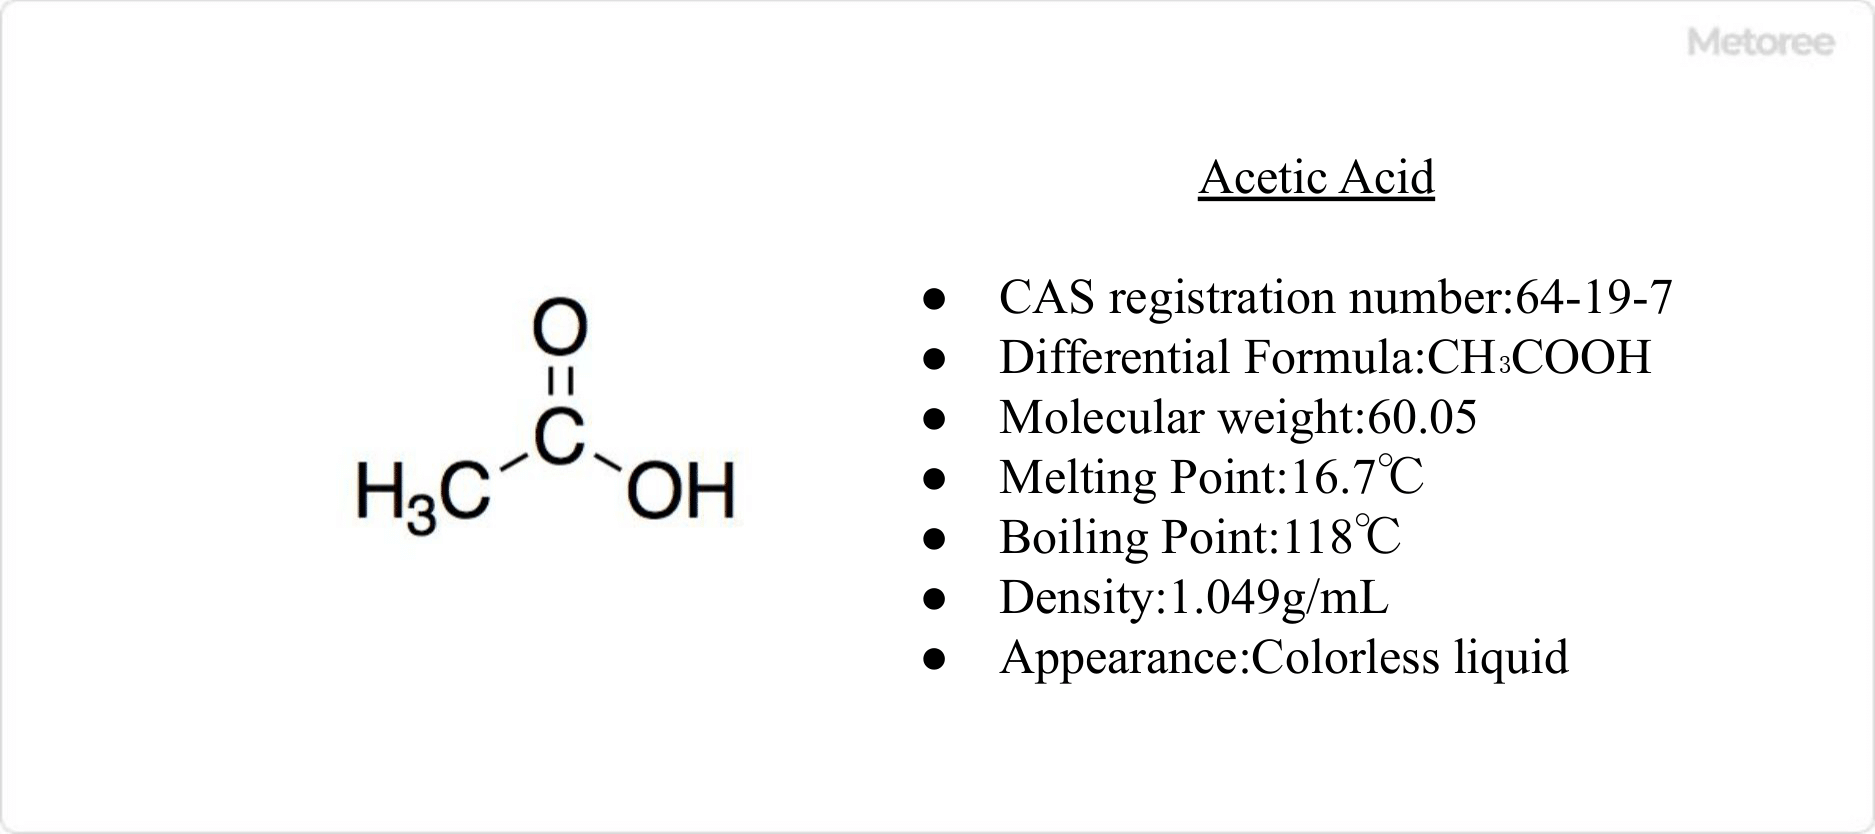 Figure 1. Basic Information on Acetic Acid